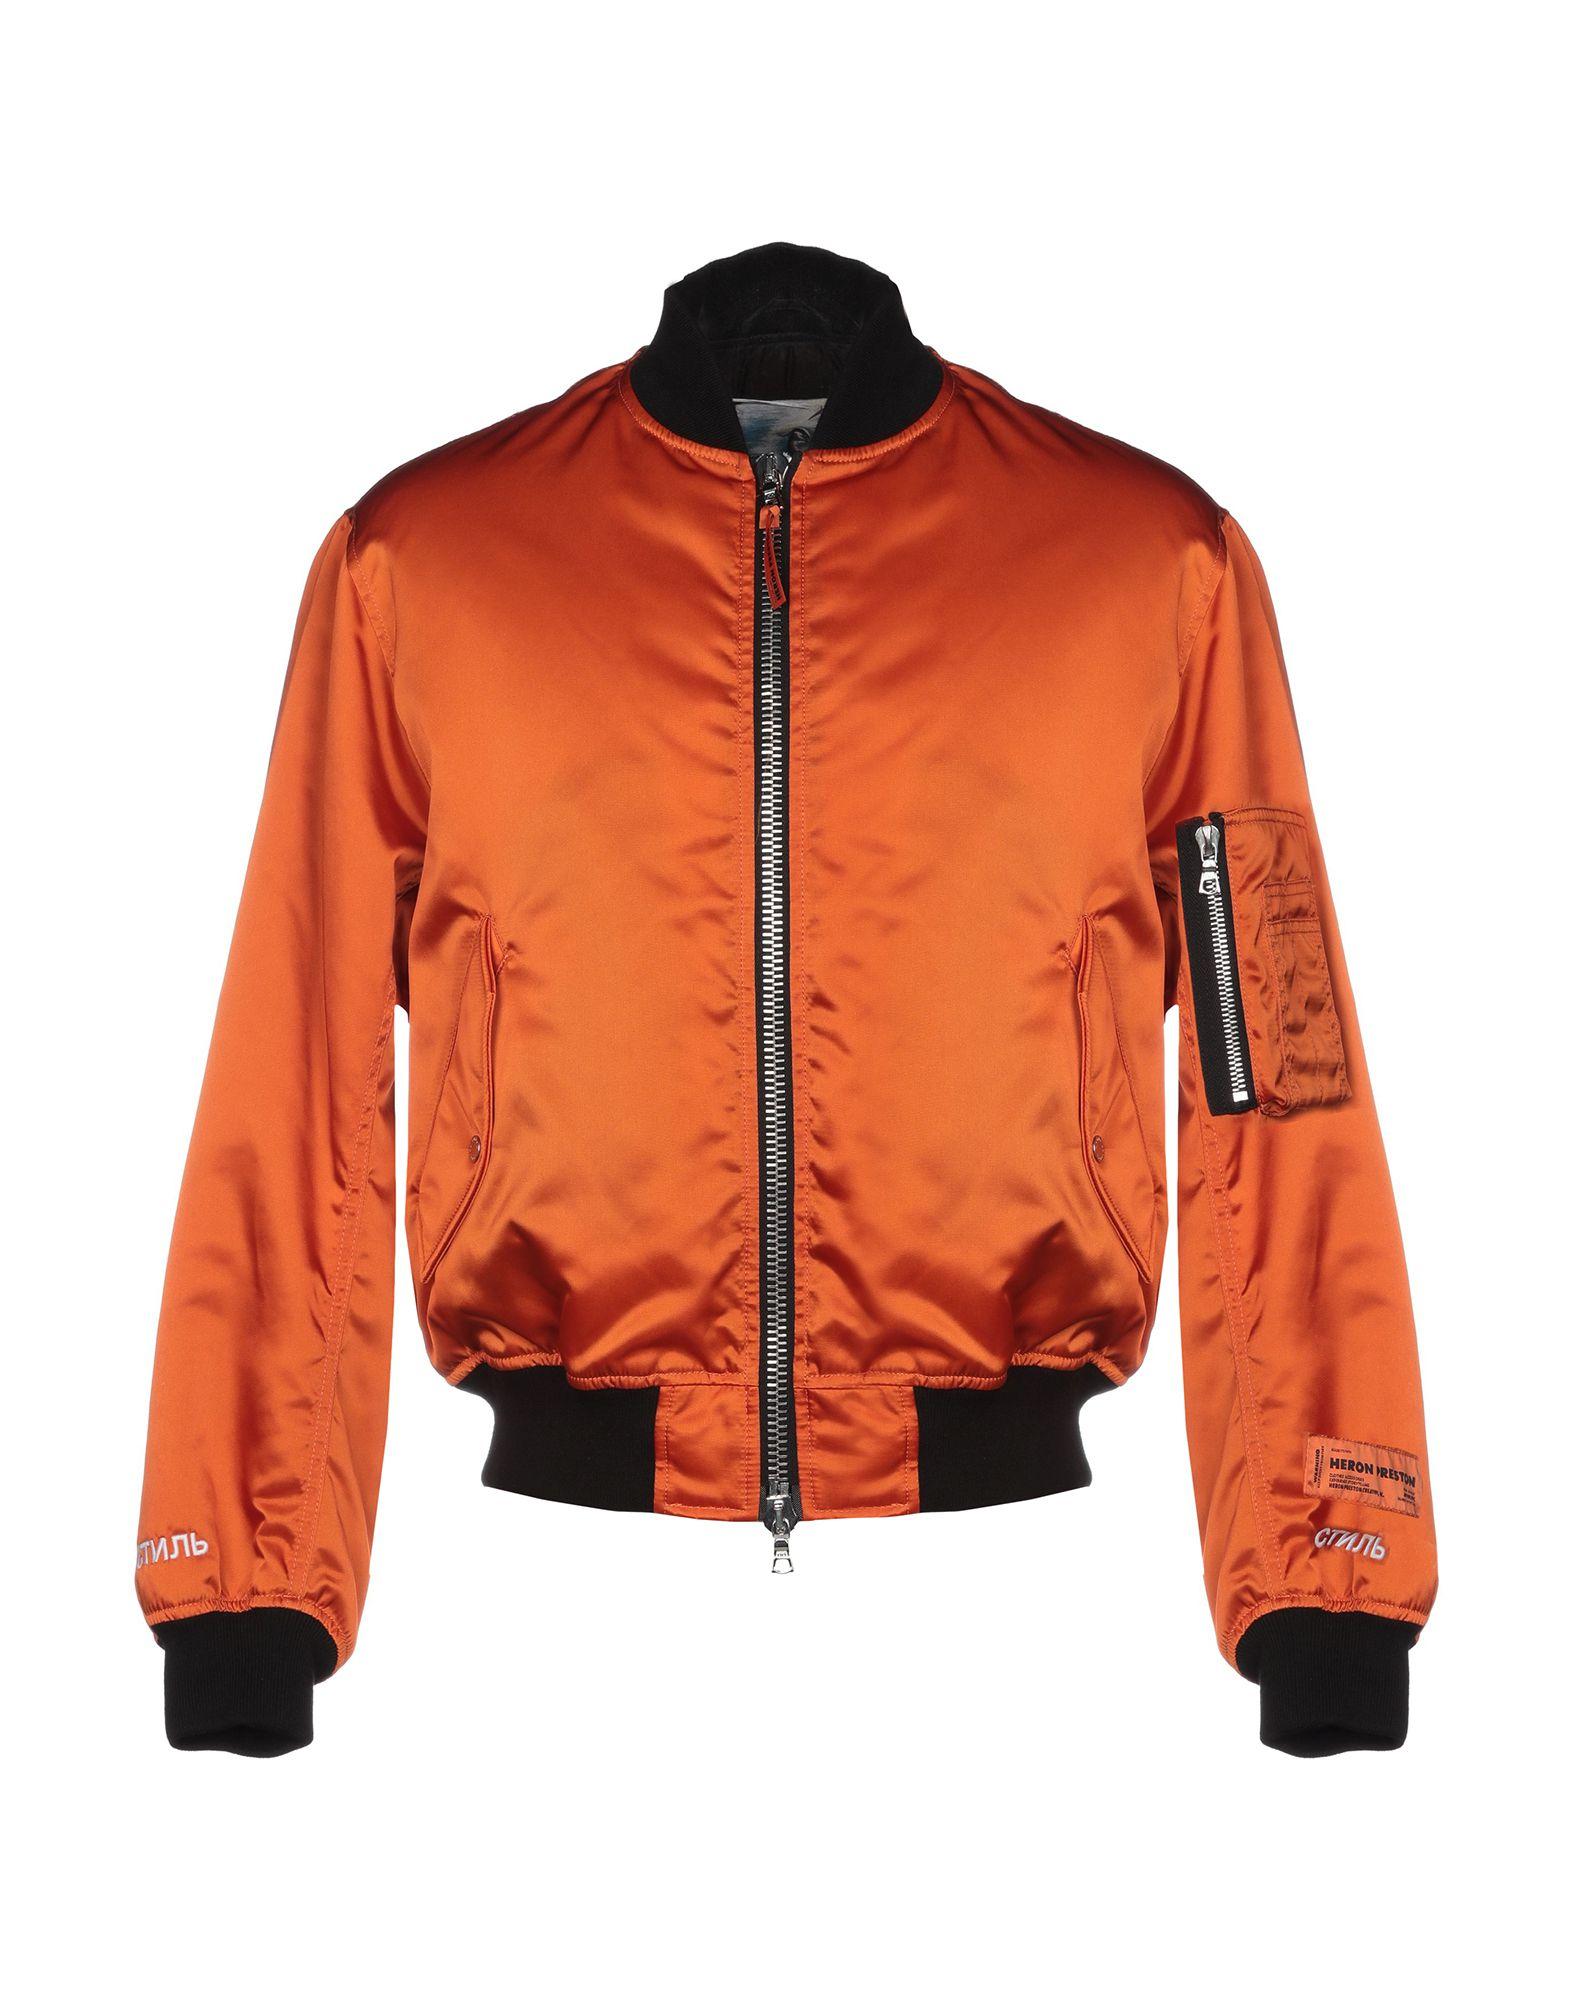 Heron Preston Synthetic Jacket in Orange for Men - Lyst